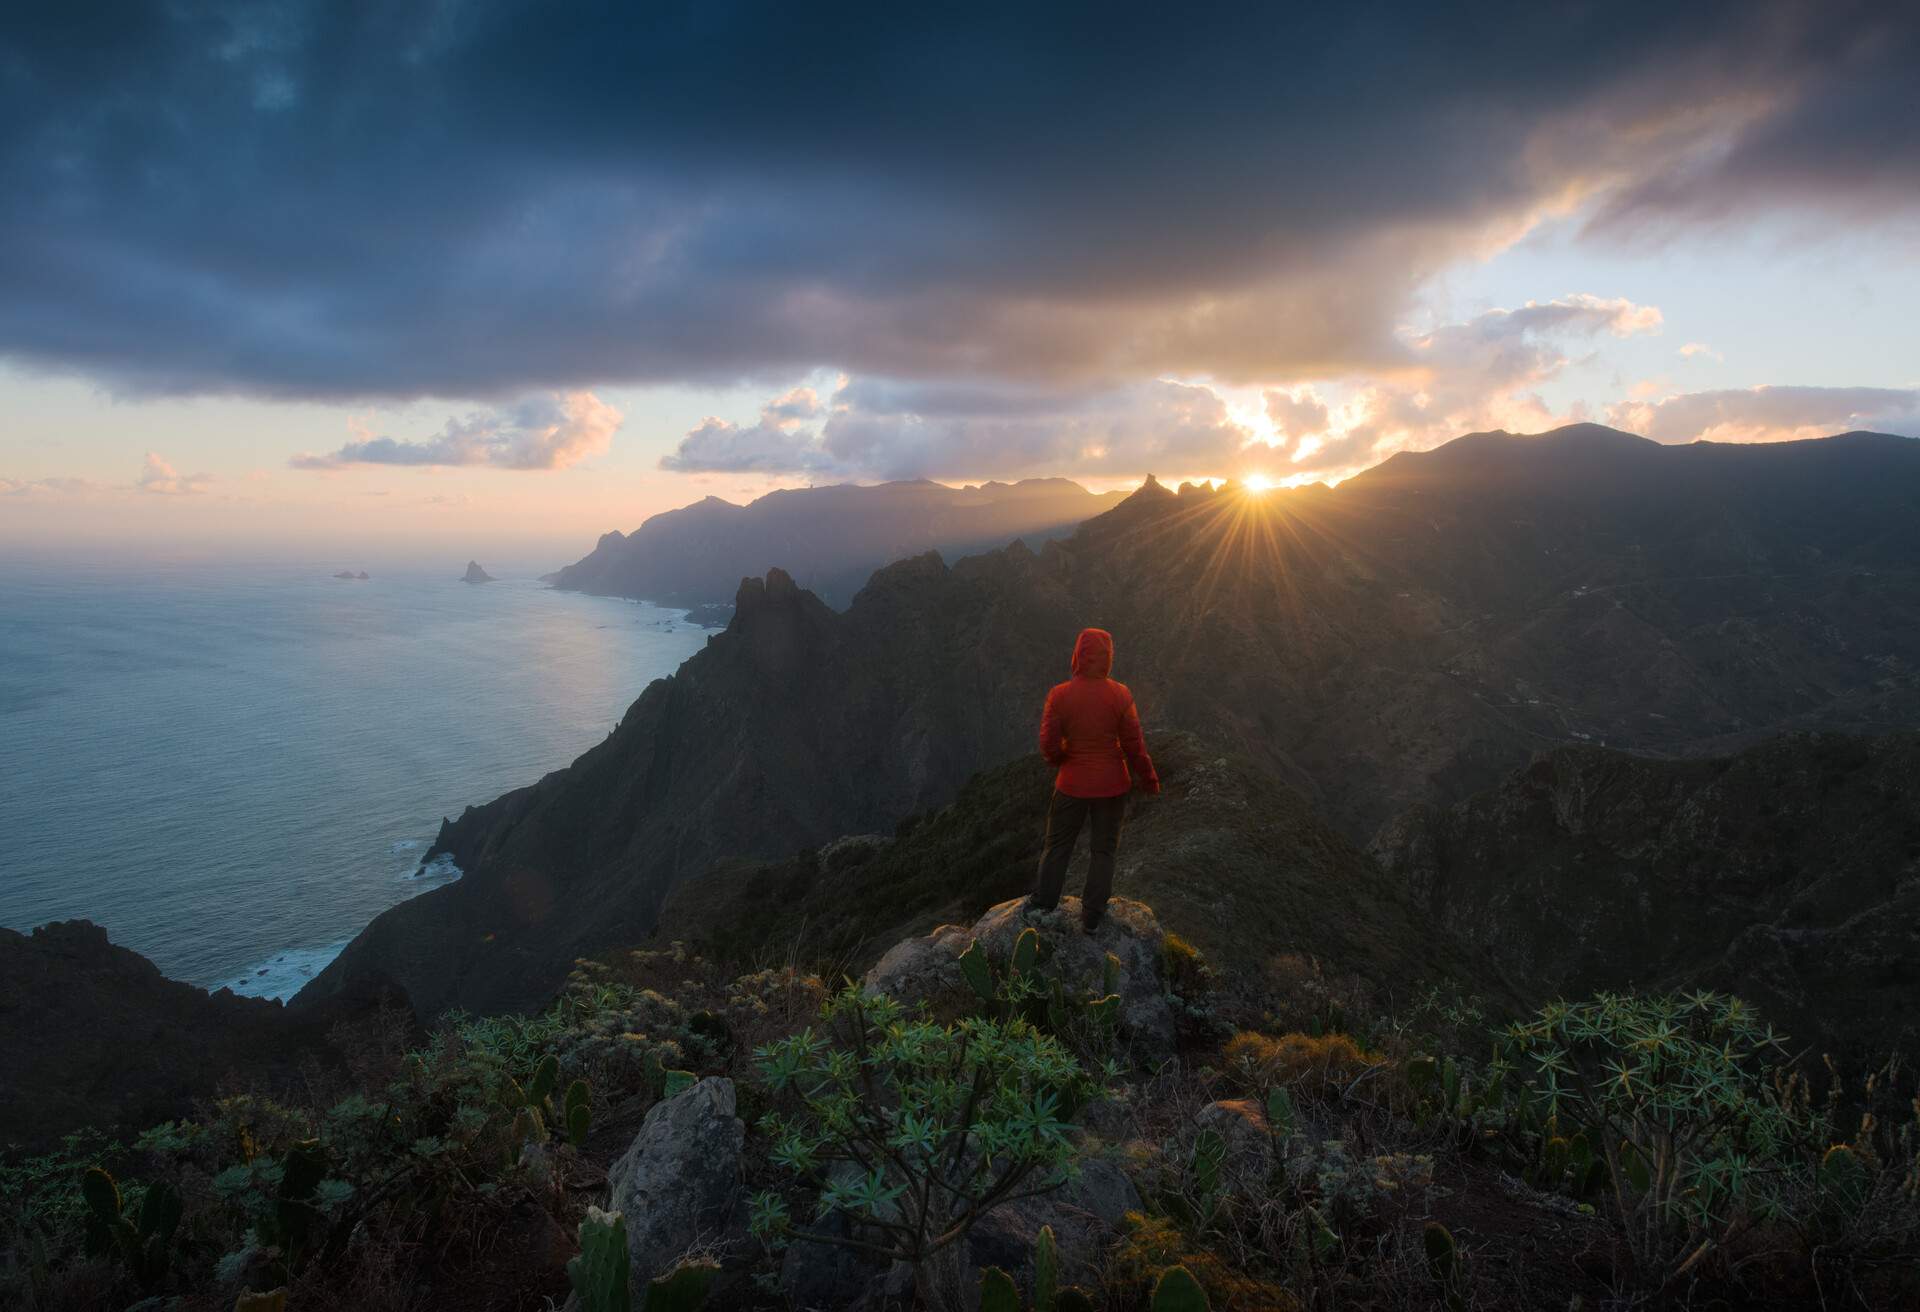 Sunrise over the Canary Islands, Anaga mountains